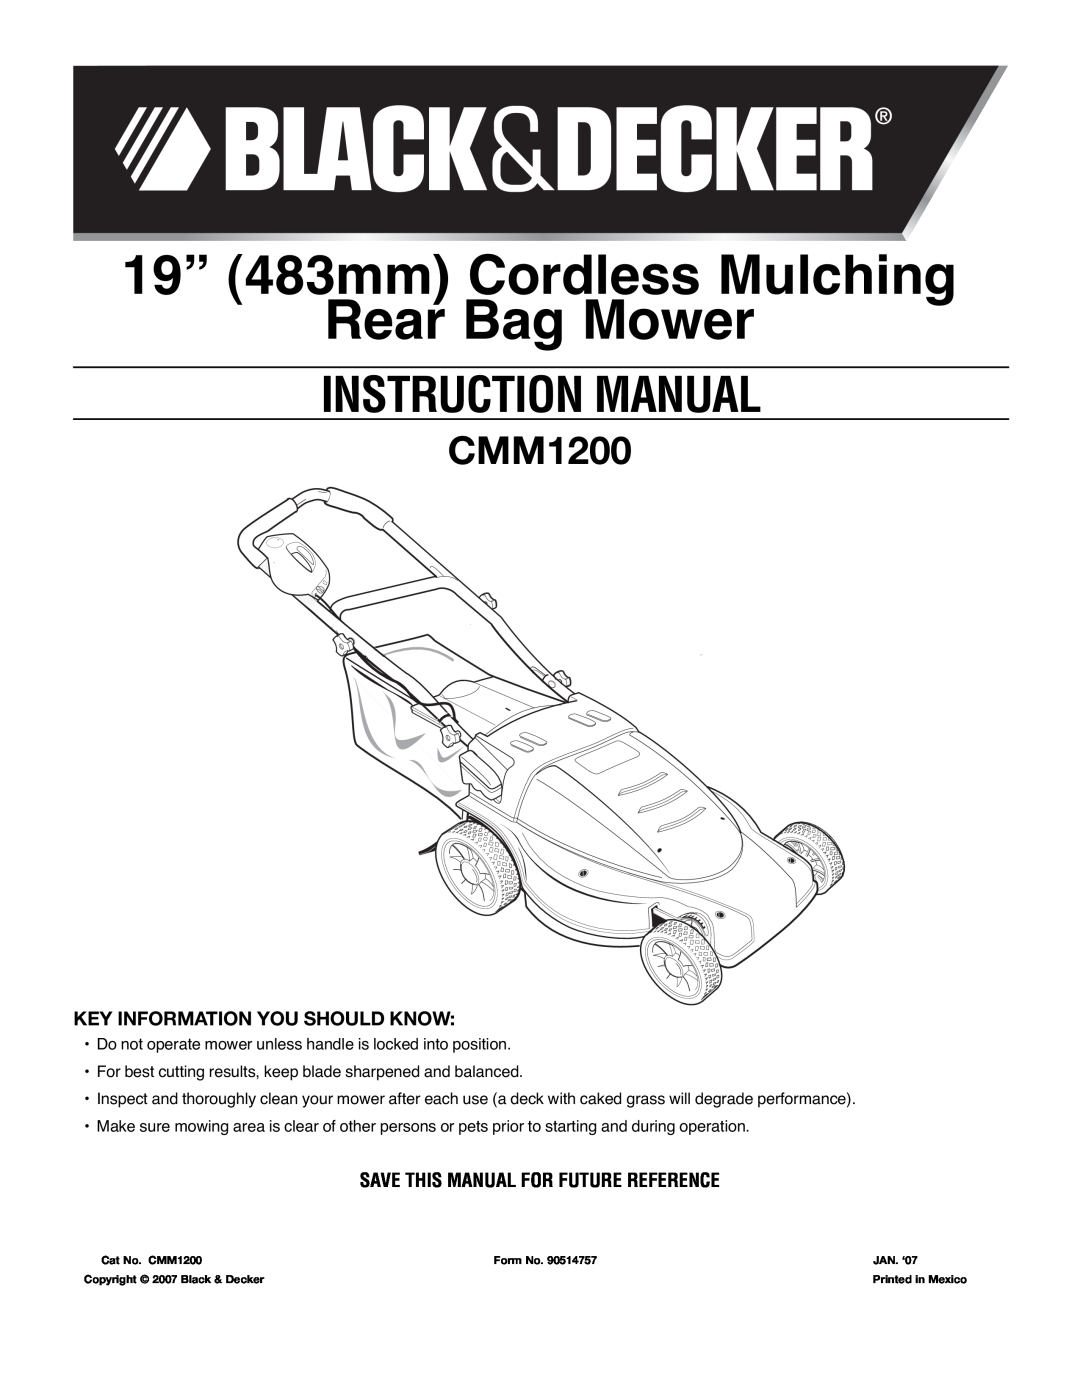 Black & Decker 90514757 instruction manual 19” 483mm Cordless Mulching Rear Bag Mower, CMM1200 